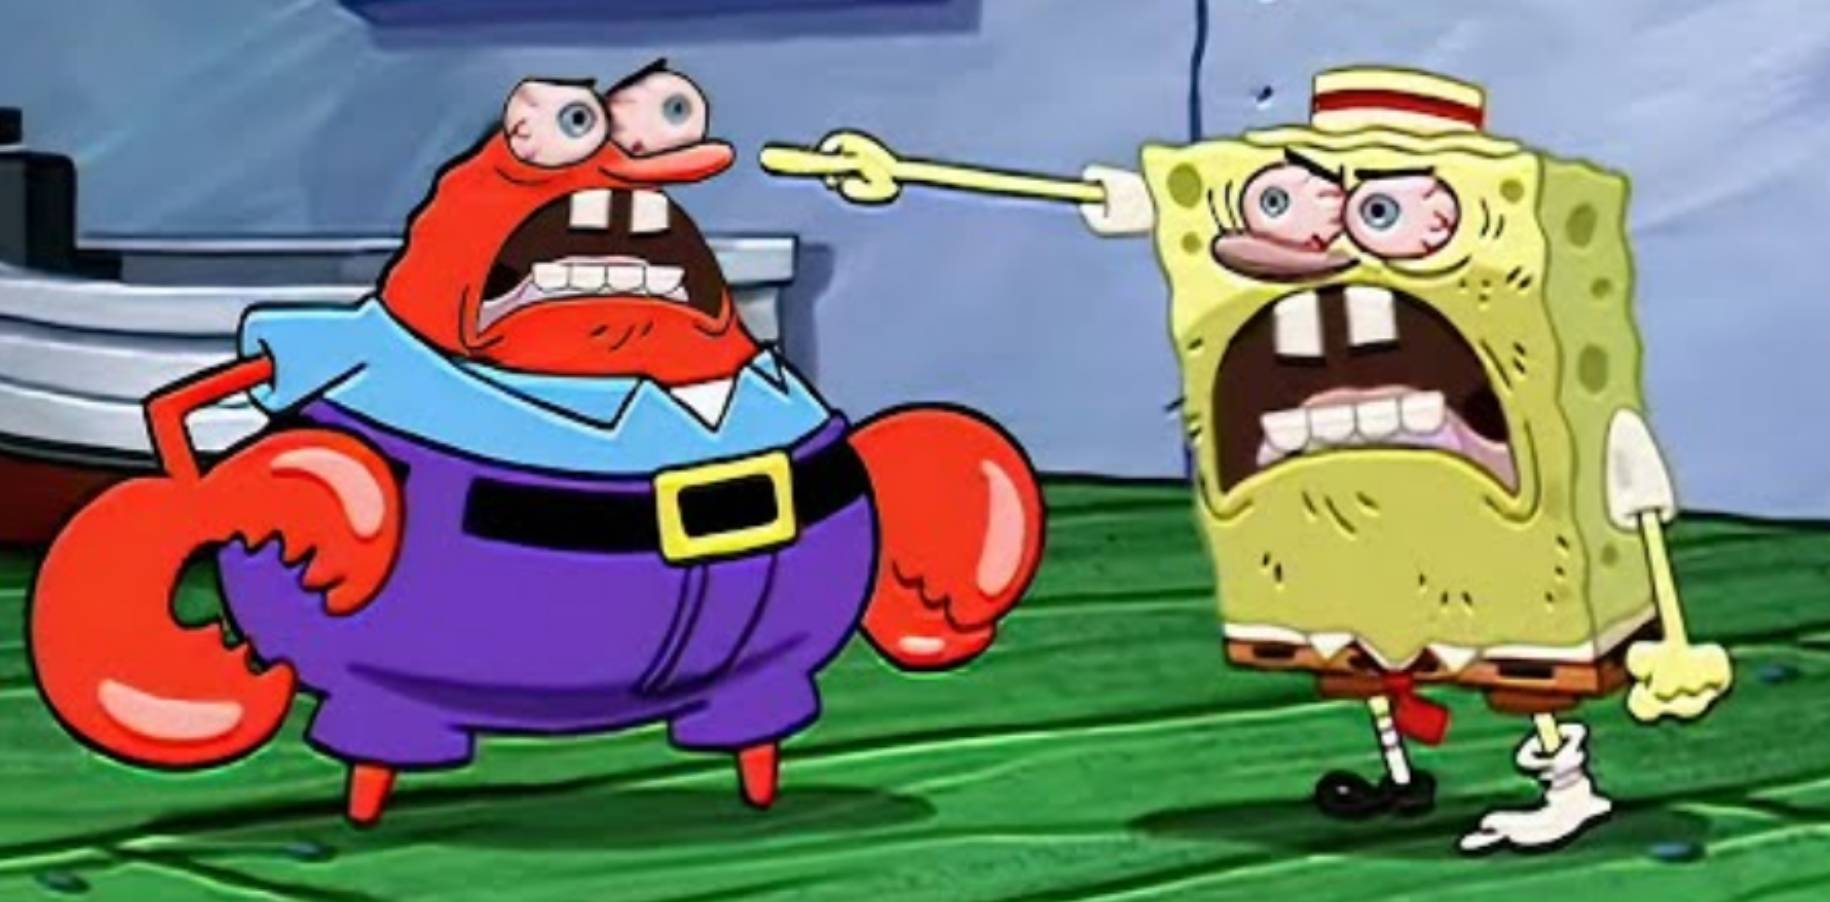 Angry mr krabs and angry spongebob Blank Meme Template